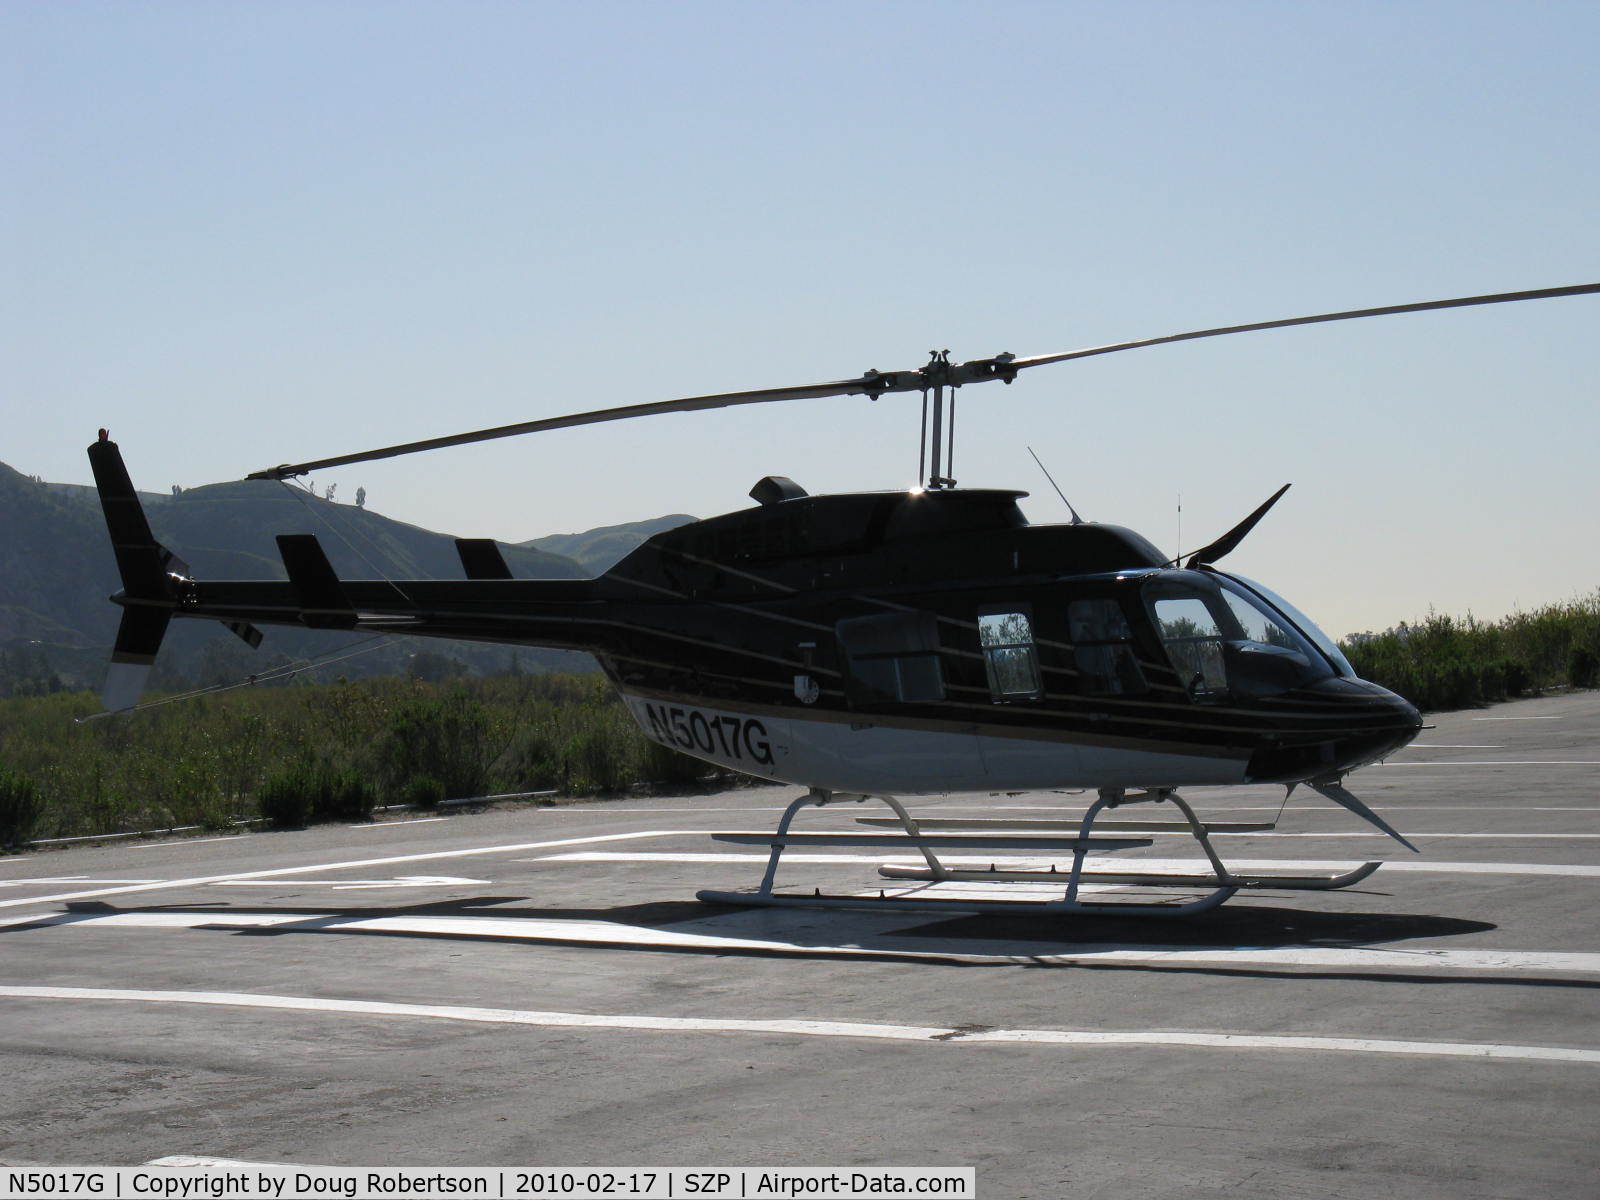 N5017G, Bell 206L-1 LongRanger II C/N 45228, 1979 Bell Textron 206L-1 JETRANGER III, Allison 250-C20B 420 shp flat rated at 317 shp, 7 place